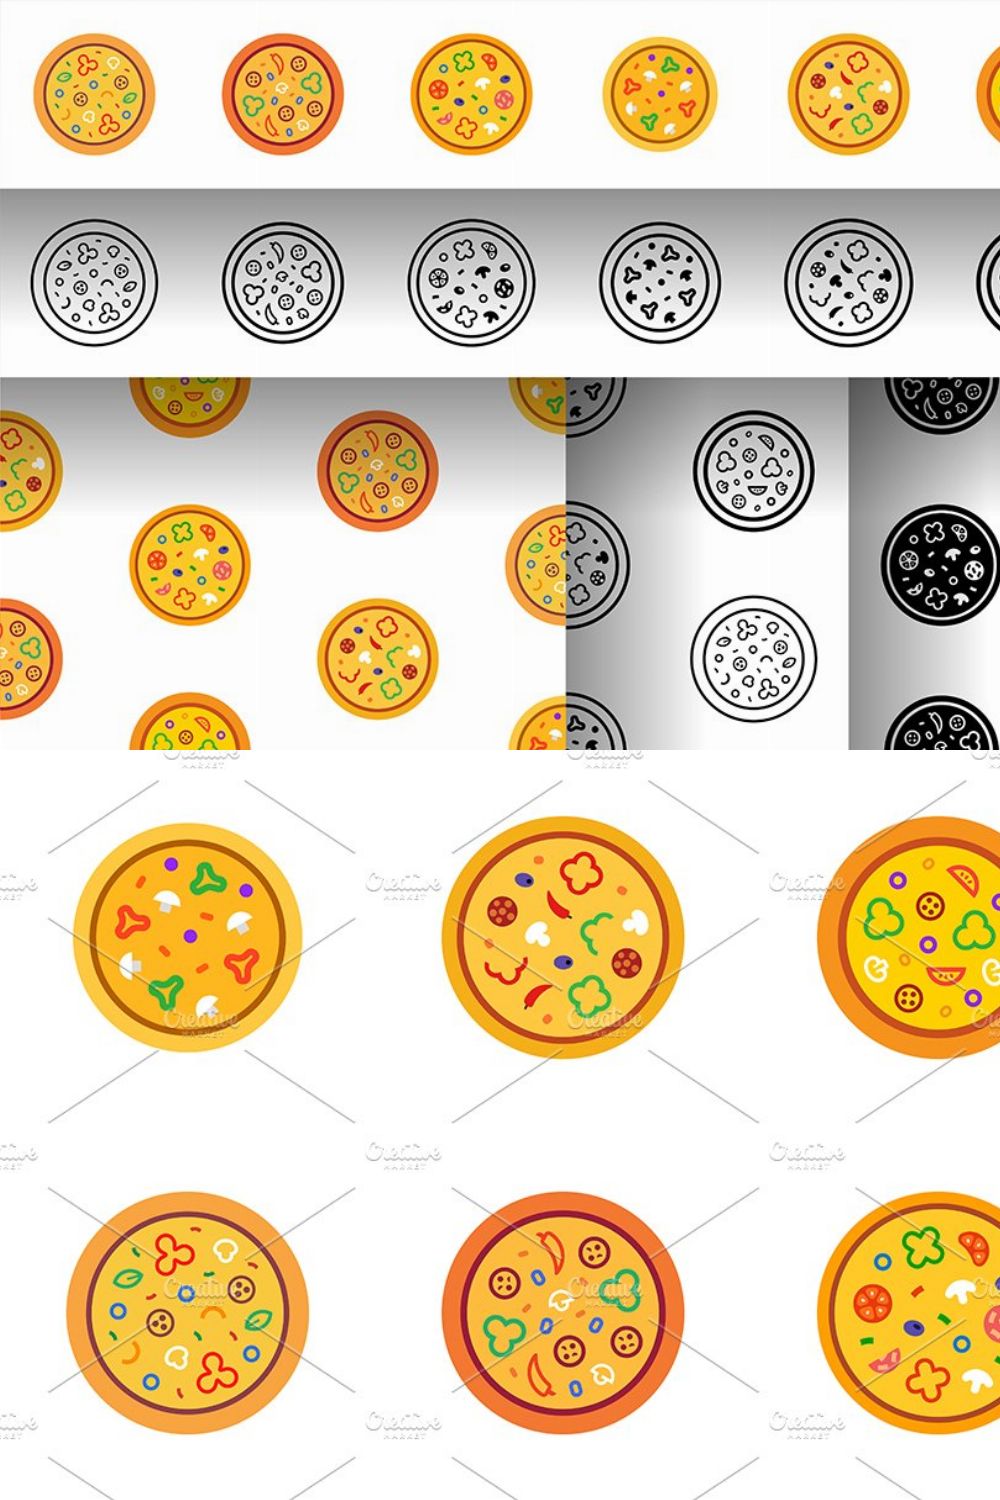 Pizza Set + pattern pinterest preview image.